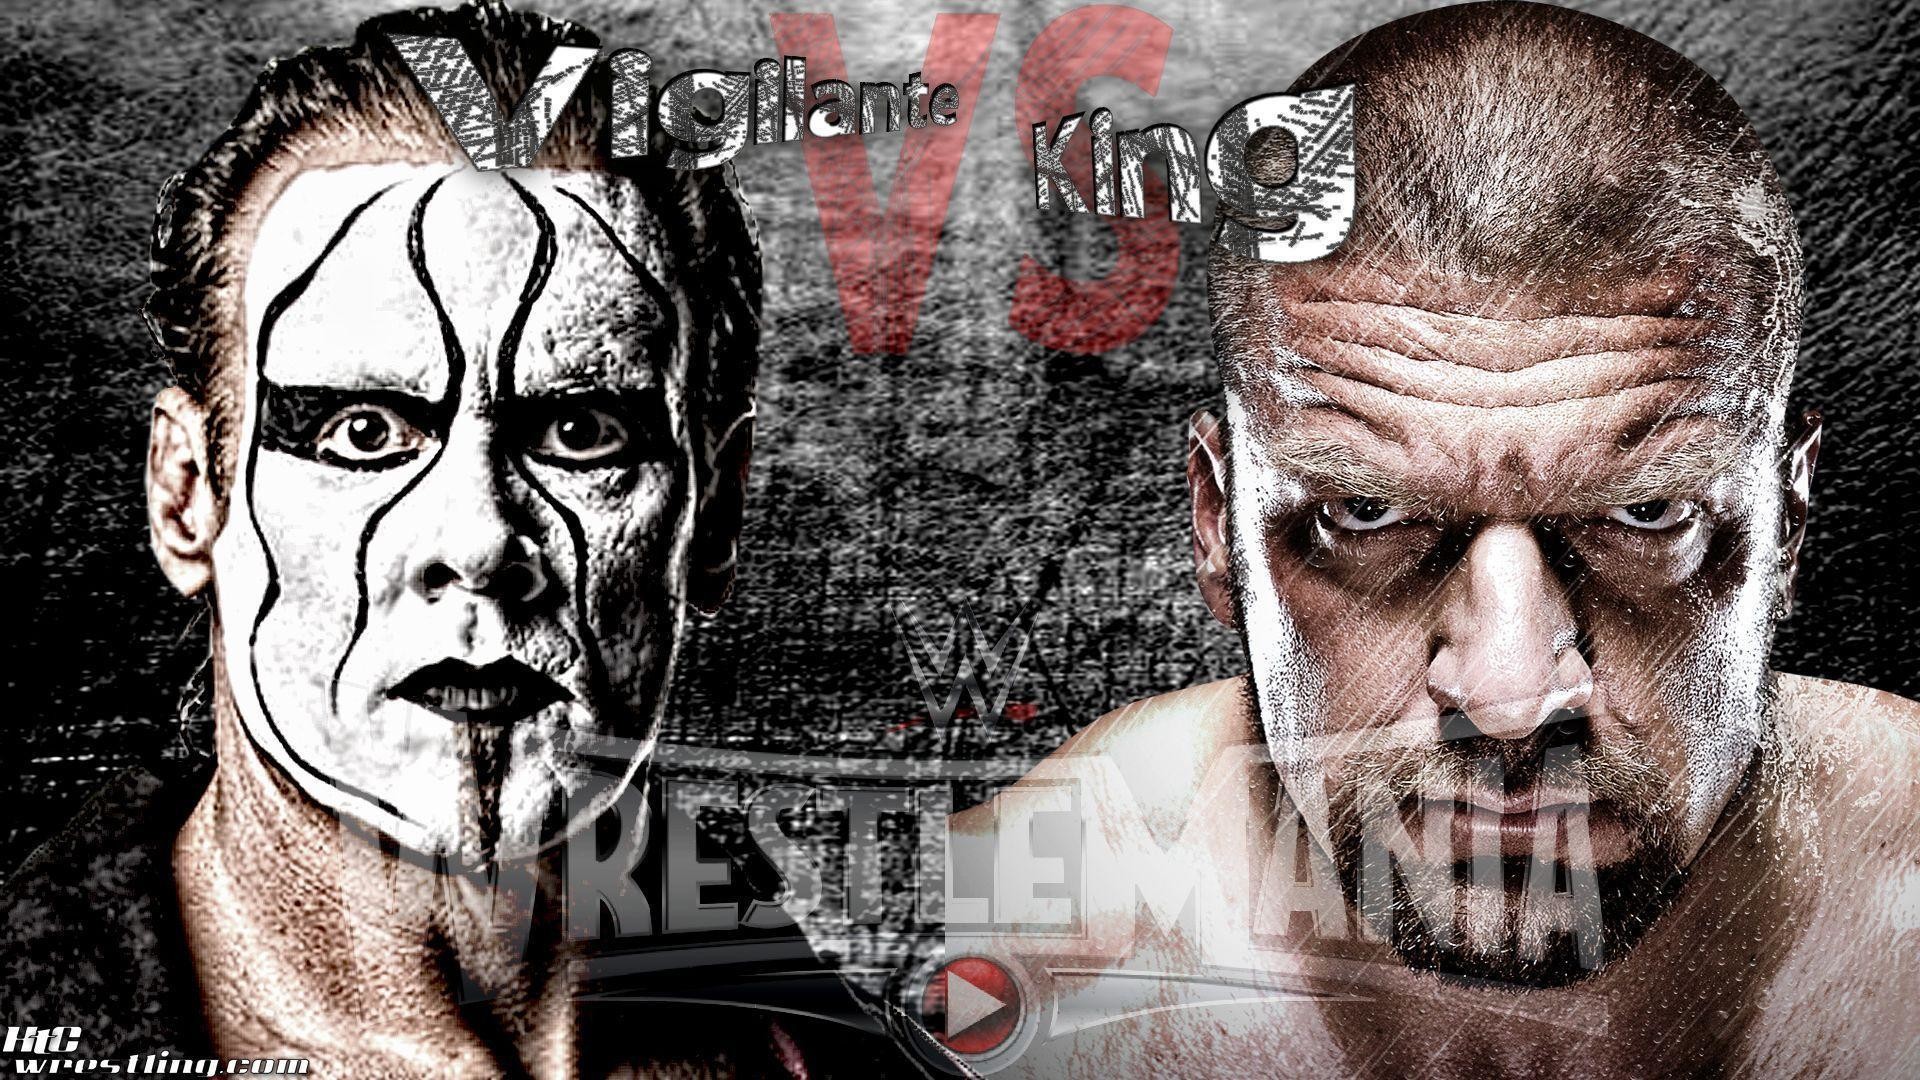 1920x1080 WrestleMania Wallpaper: “Vigilante vs King” – Sting vs HHH at .